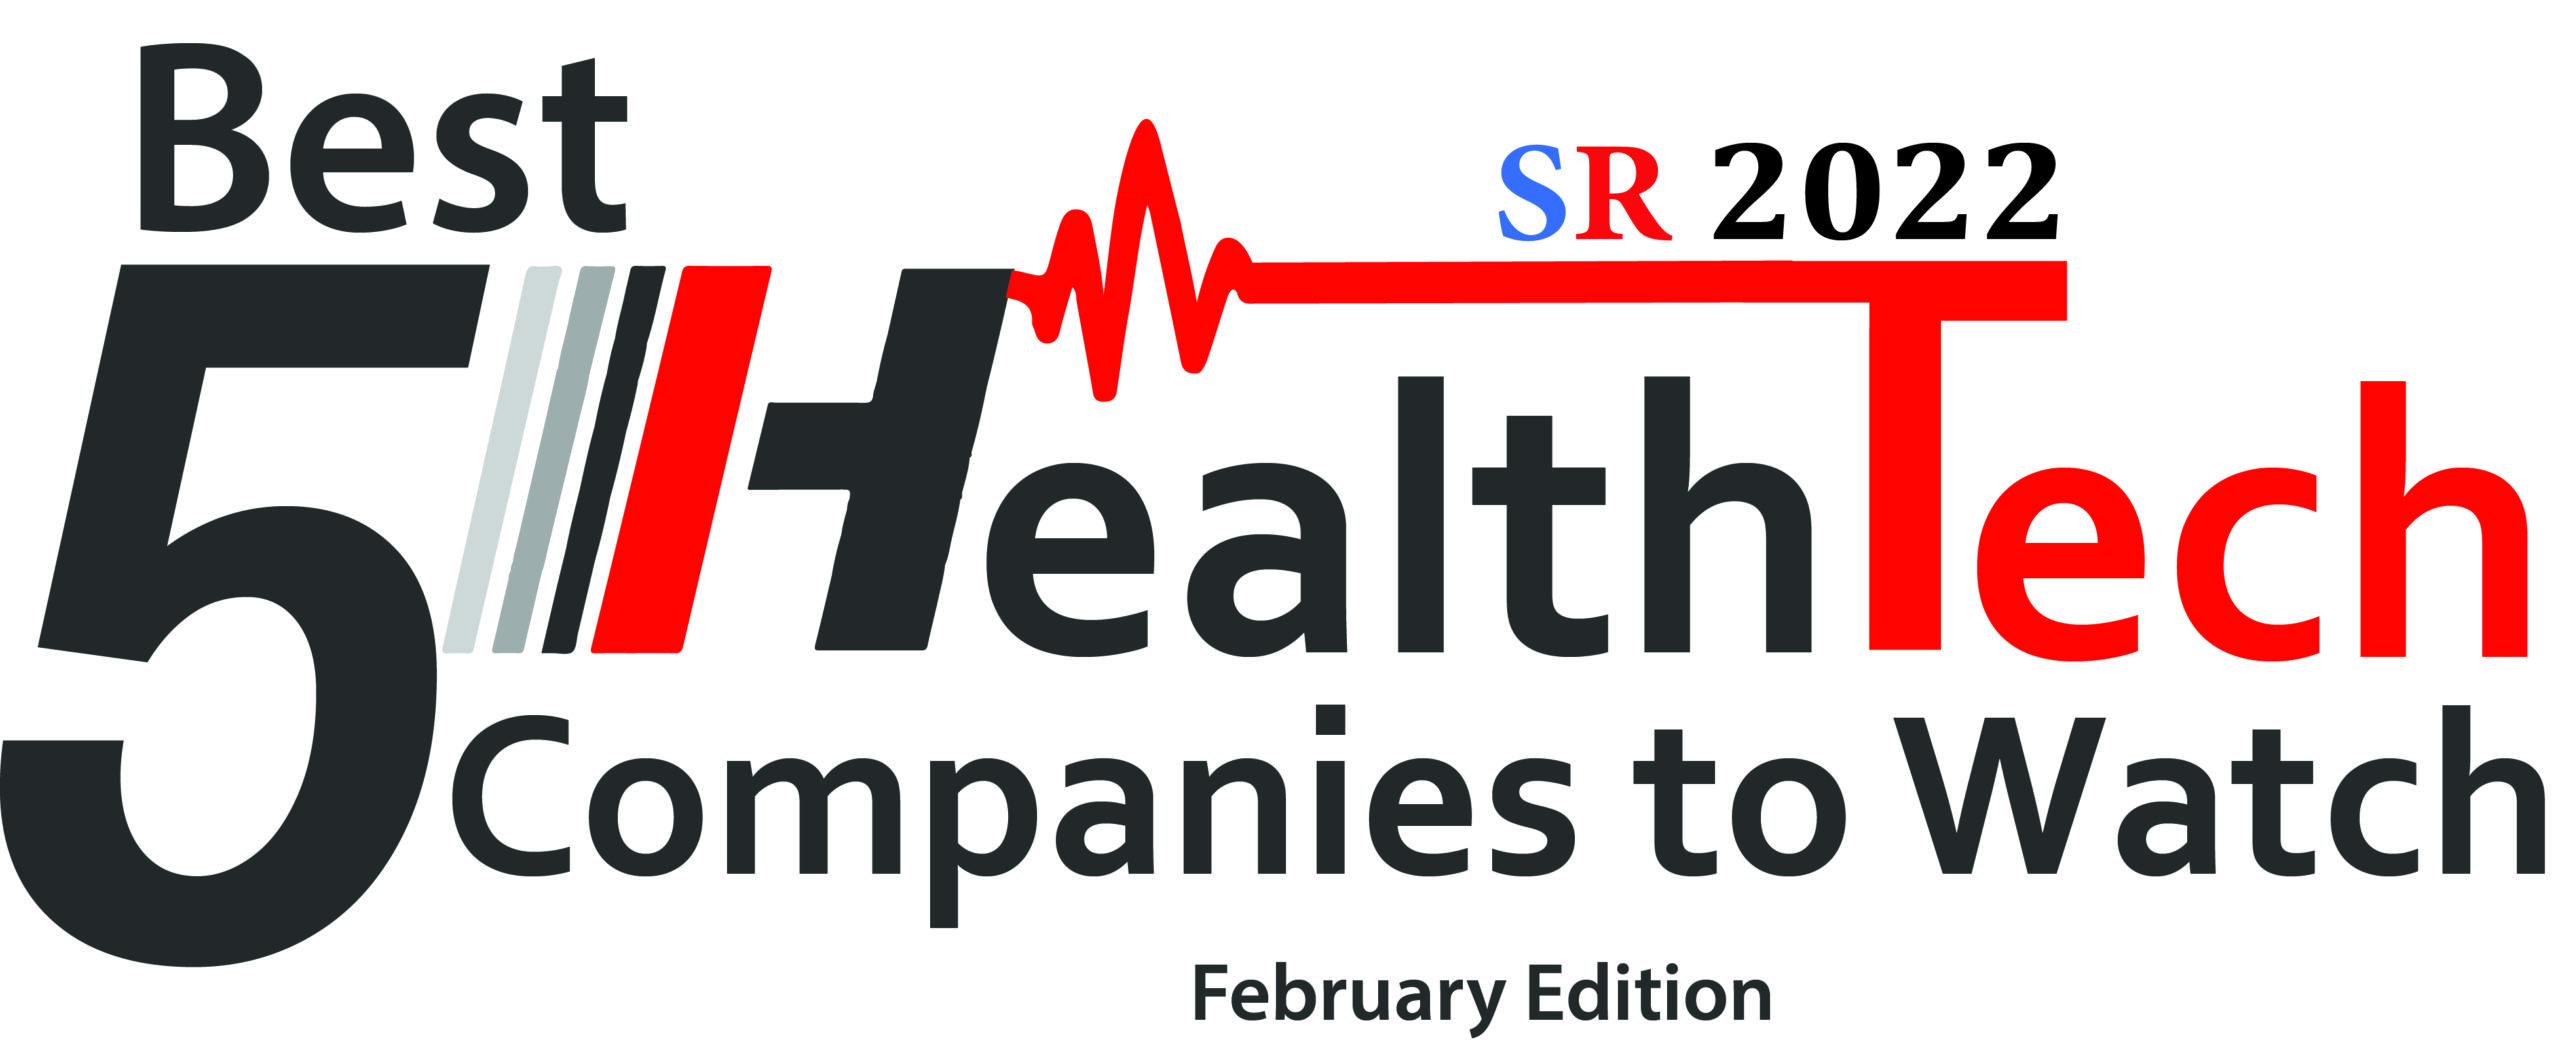 Best HealthTech Companies to watch in 2022